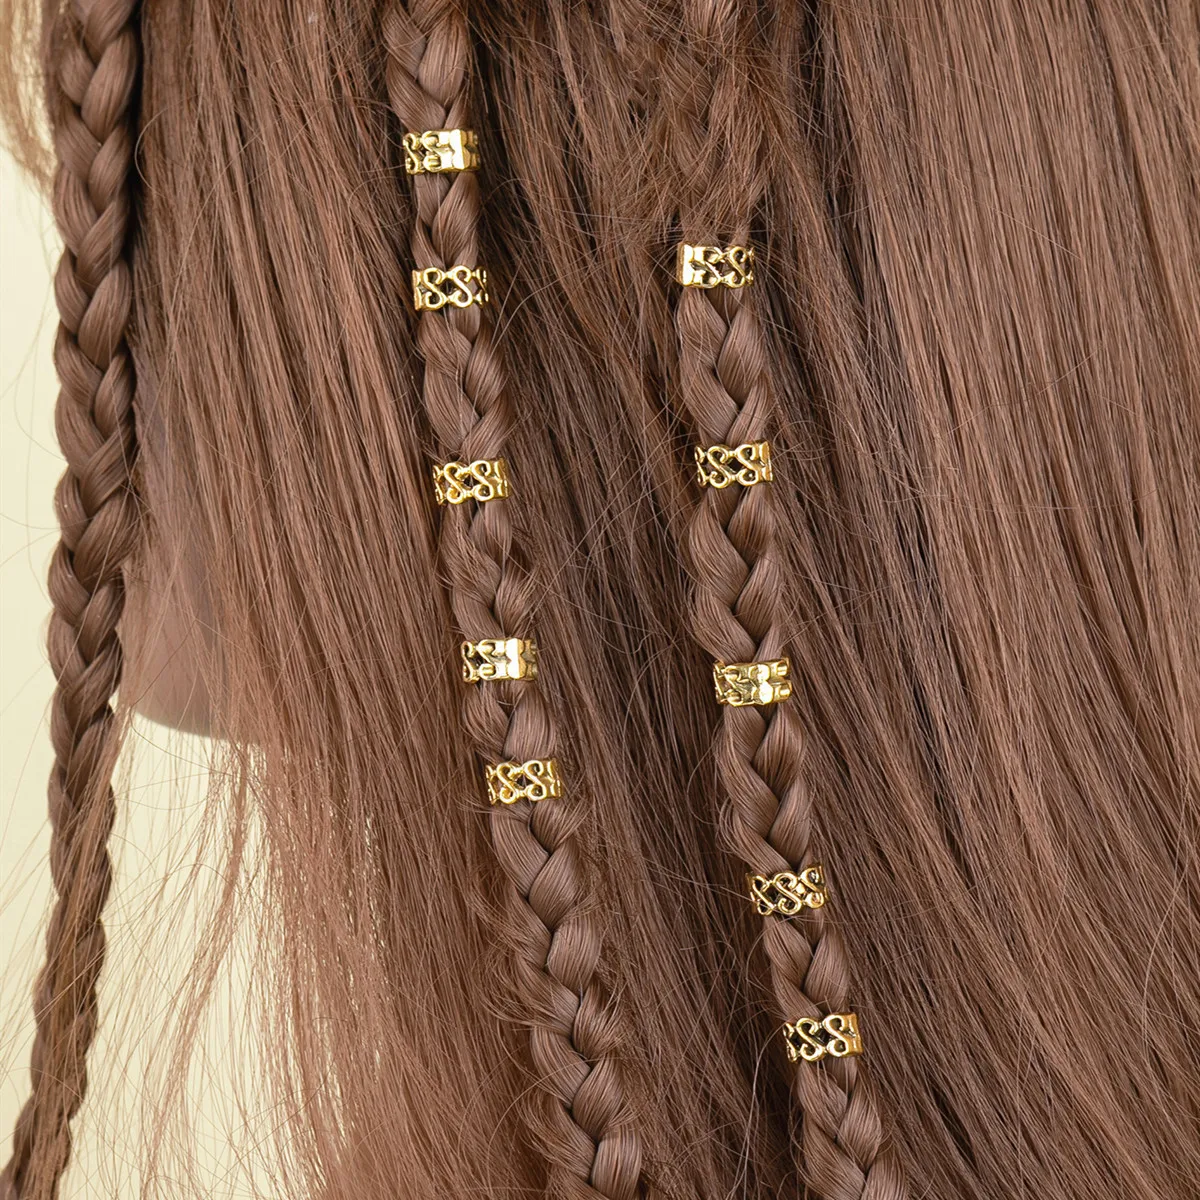 

10pcs/set Gold Dreadlock Retro Beads Hair Braid Dread Clips African Braids Cuff Rings Jewelry Decor Dreadlock Clasps Accessories